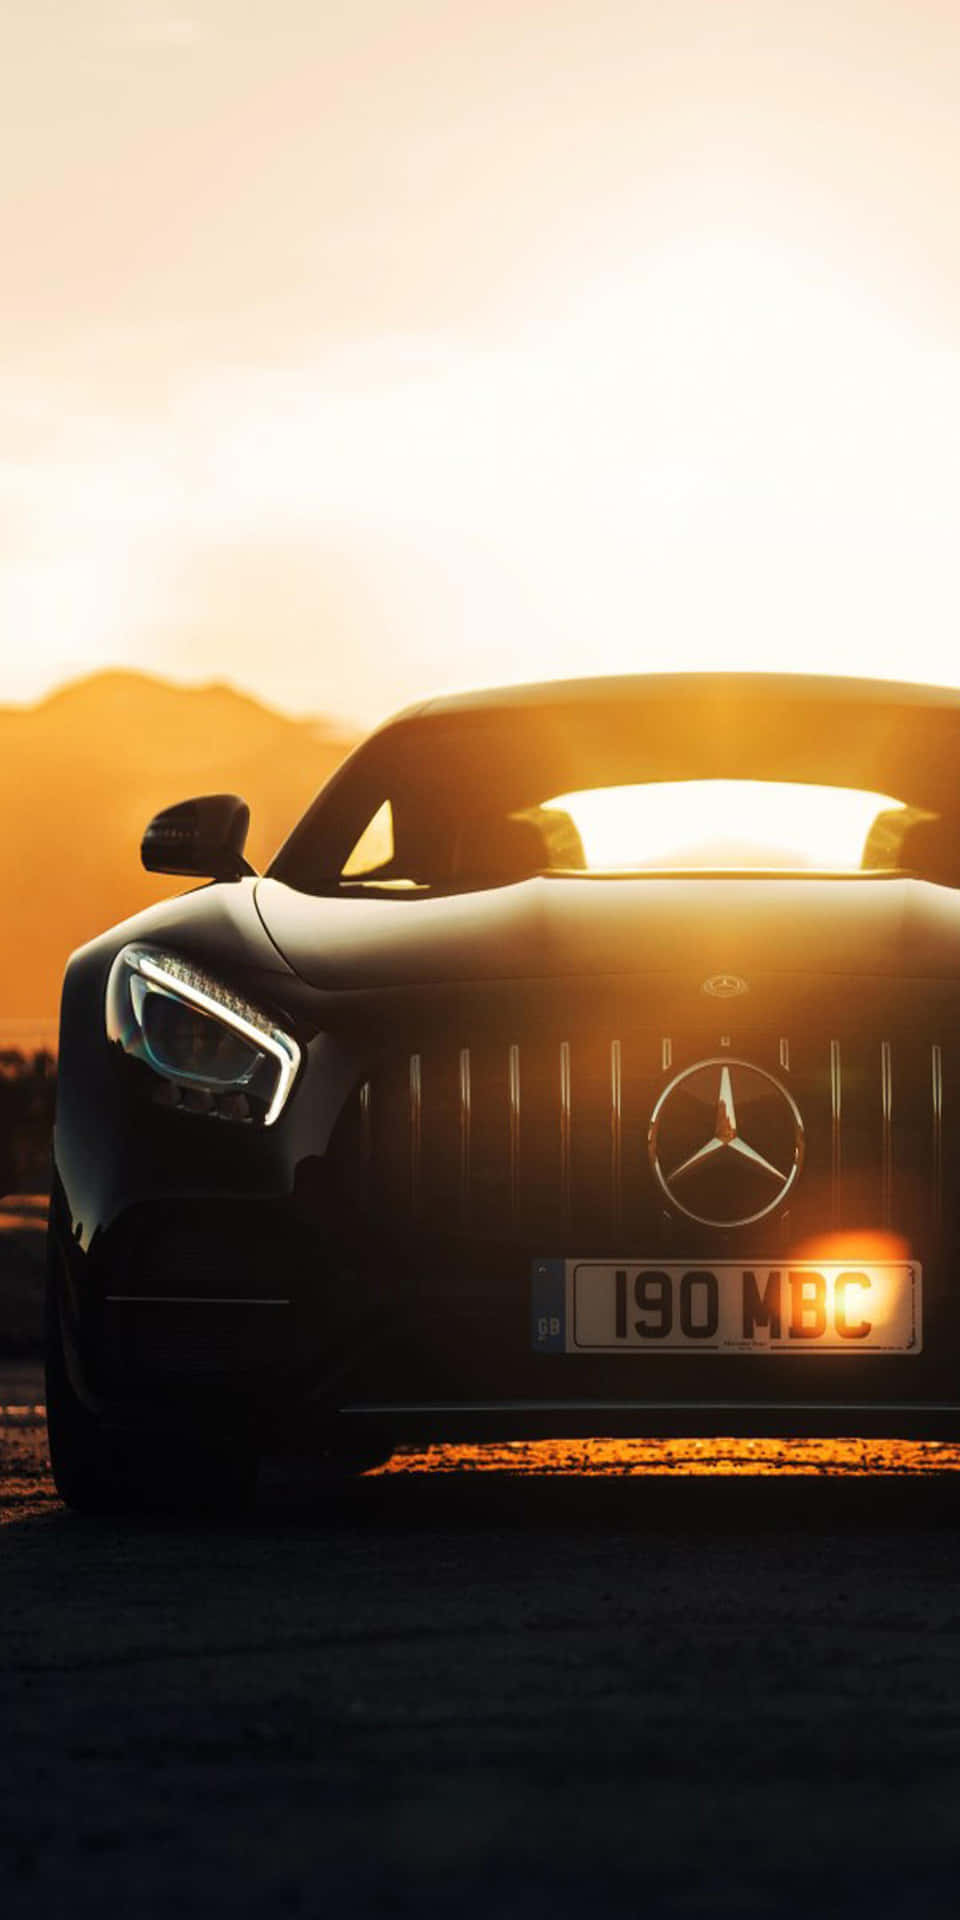 Pixel3 Mercedes Amg Bakgrundsbild